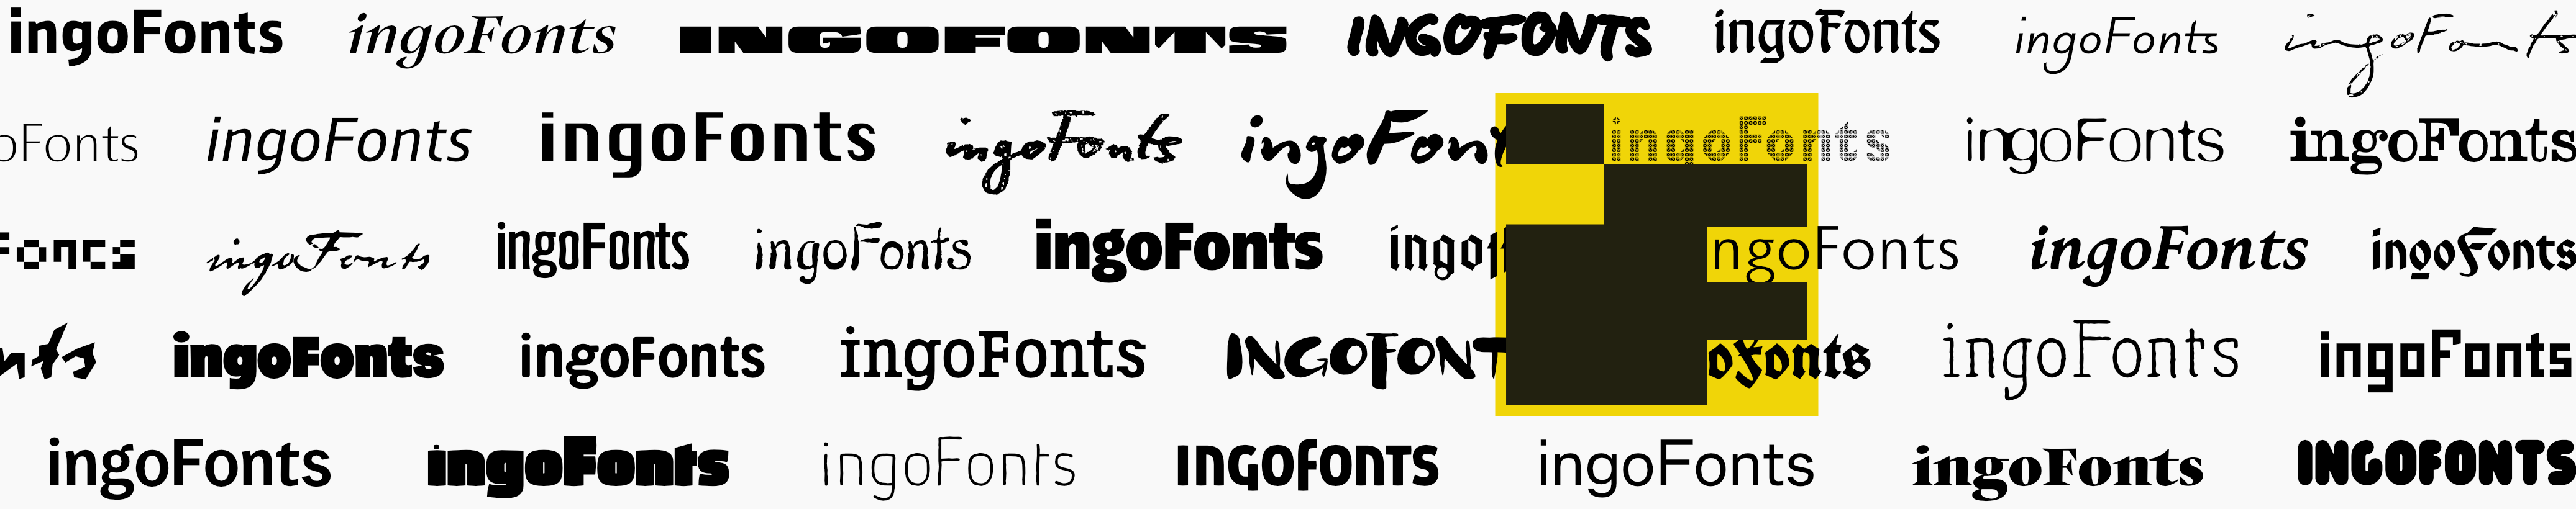 ingo Fonts's profile banner